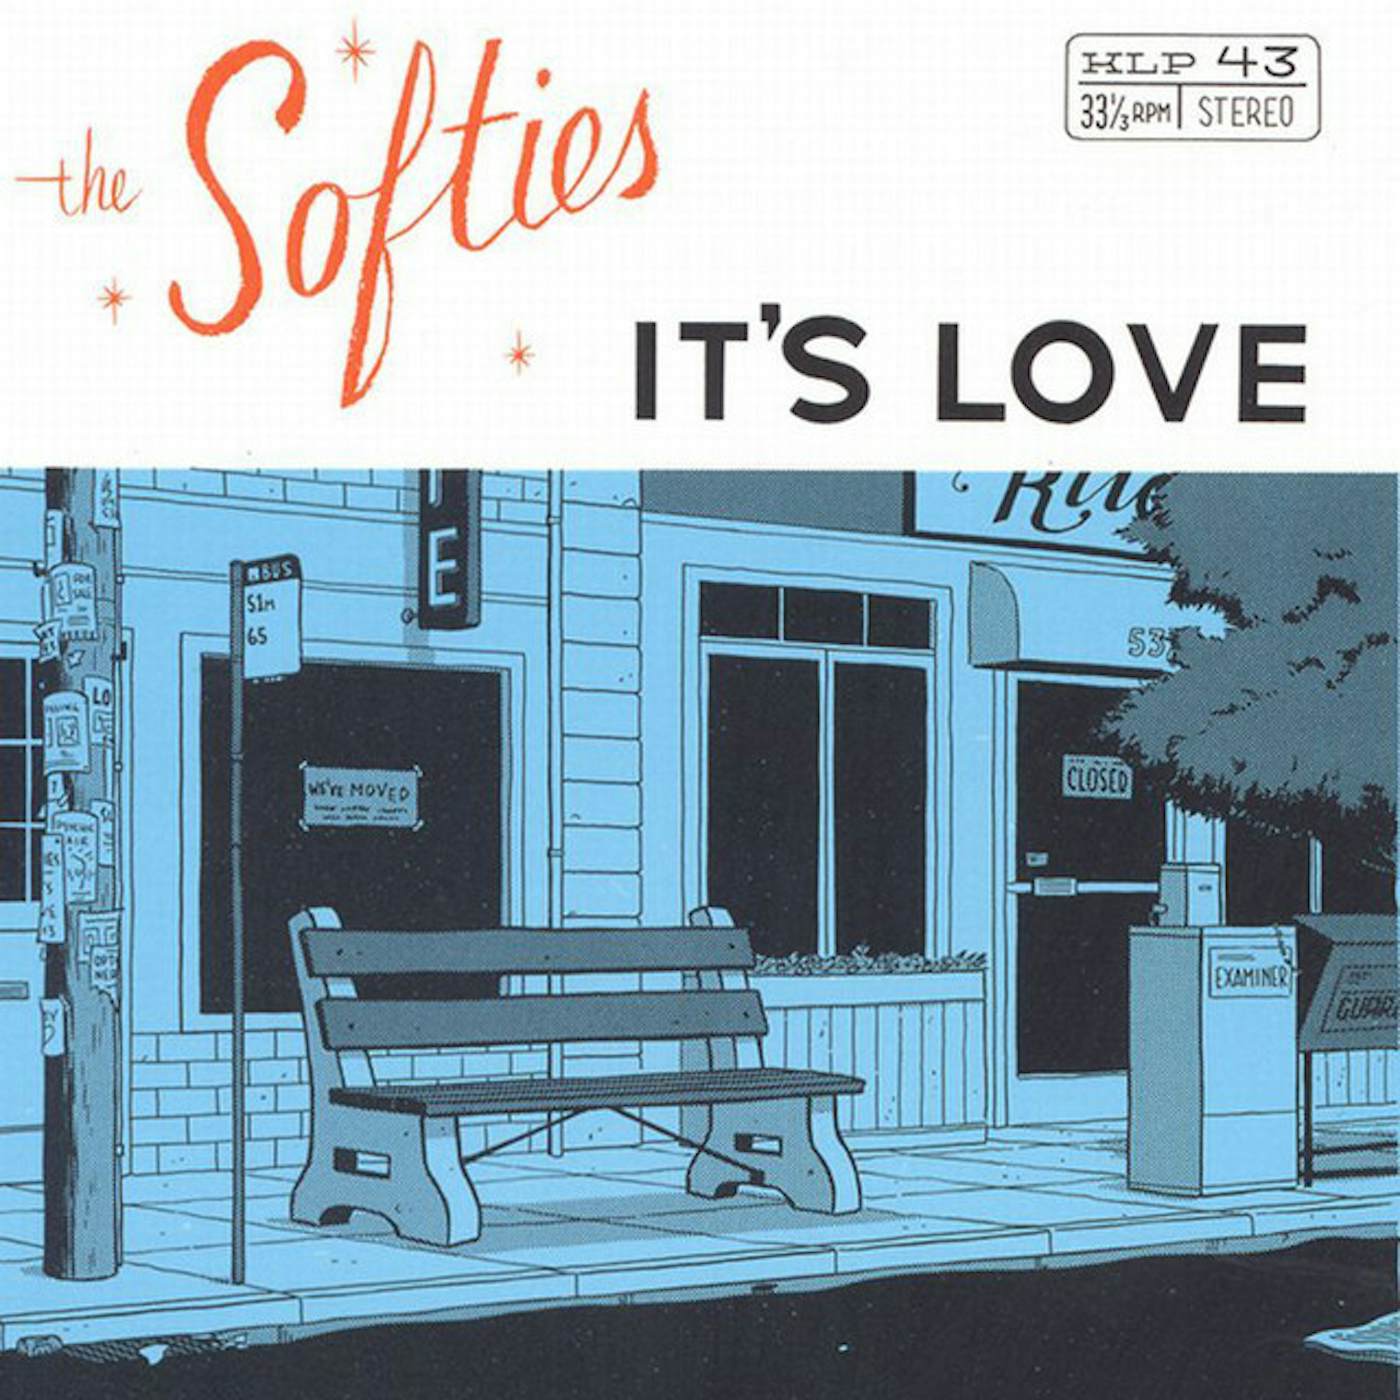 The Softies IT'S LOVE CD